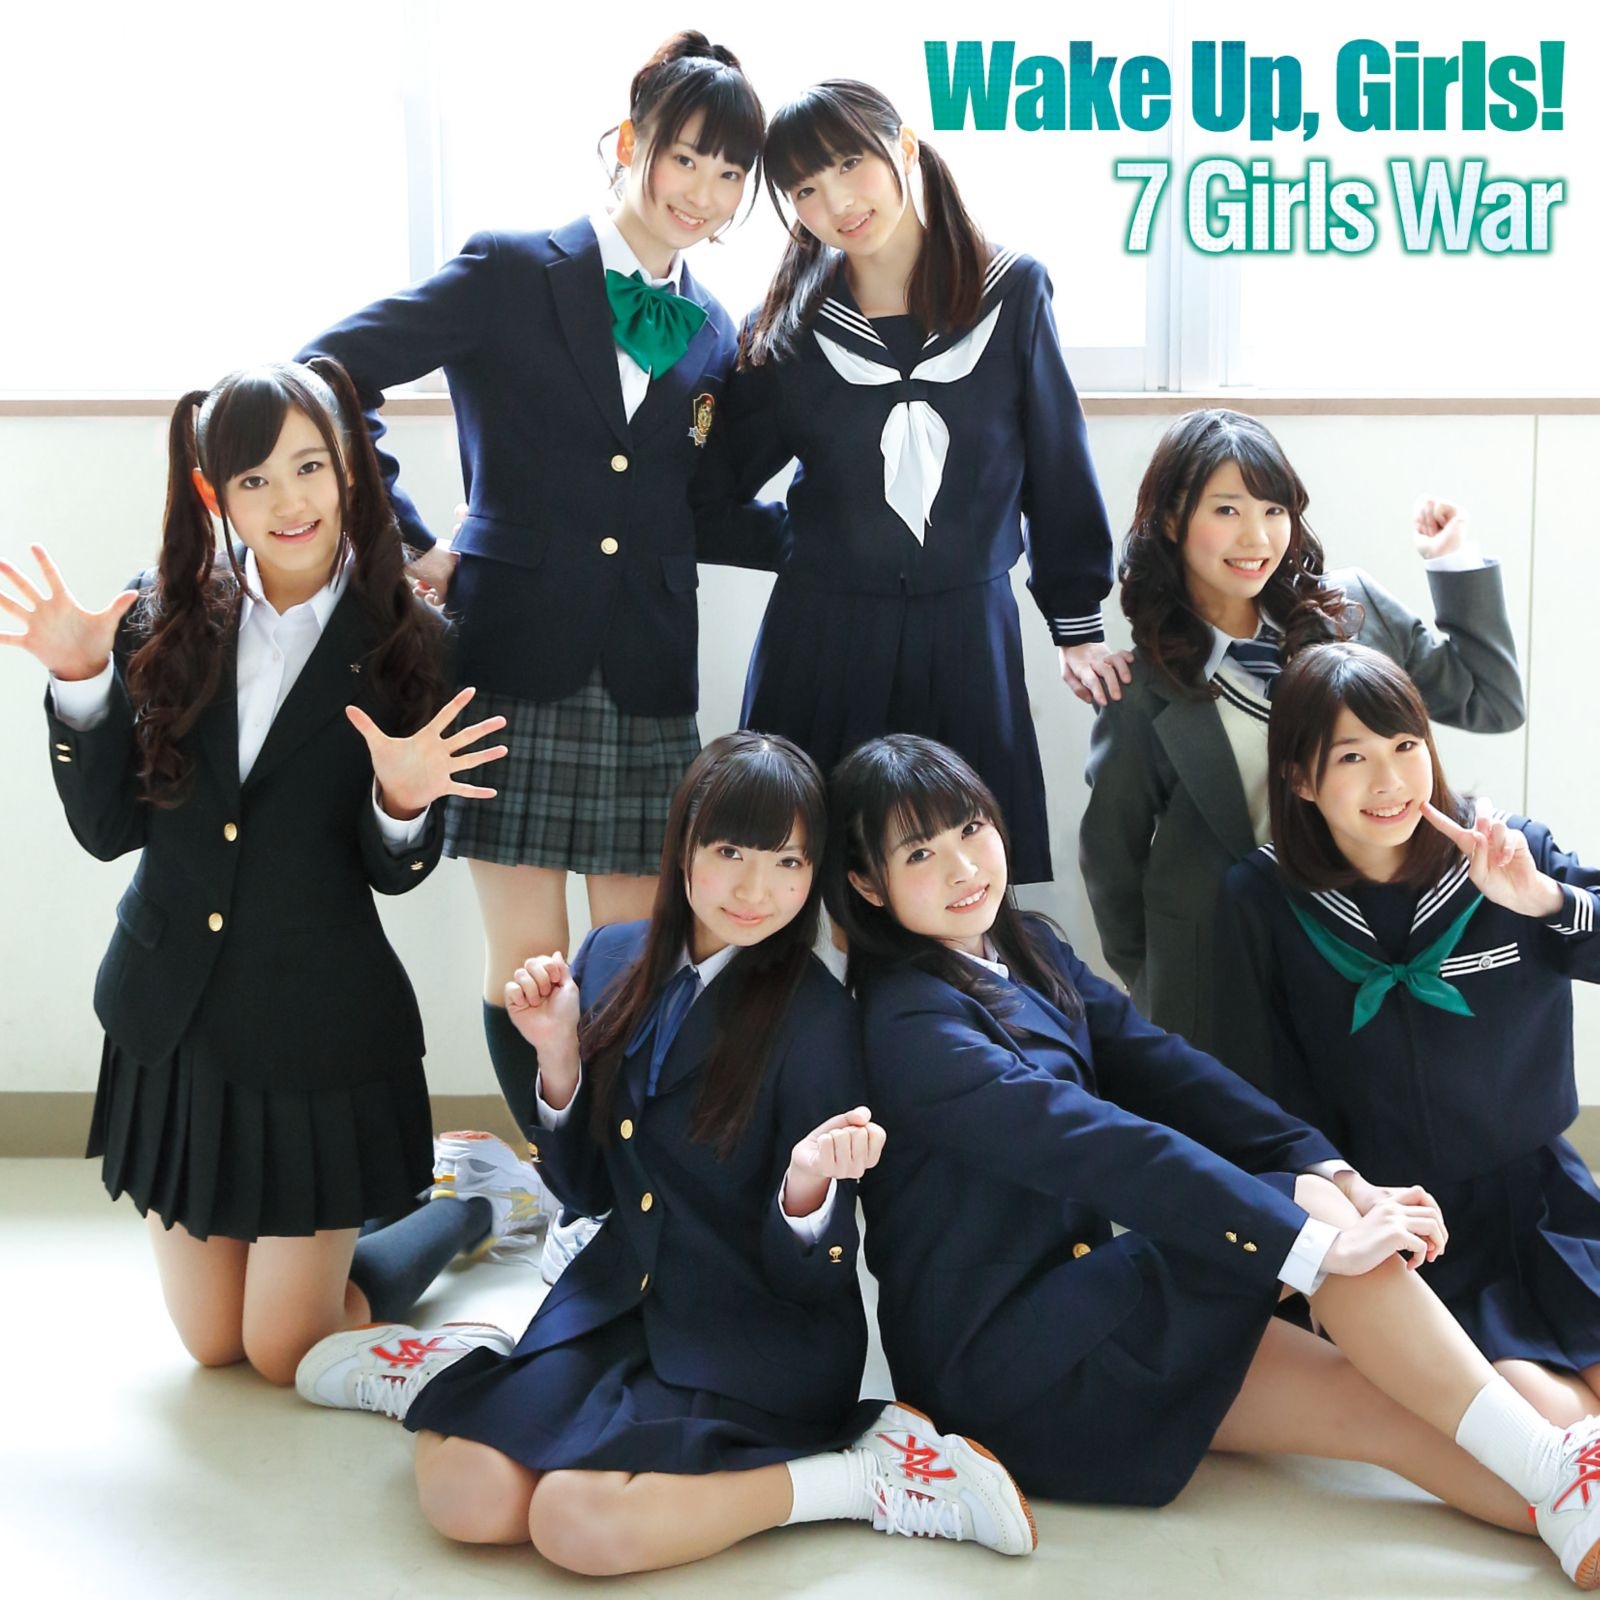 7 Girls War Wake Up, Girls! zhu ti ge